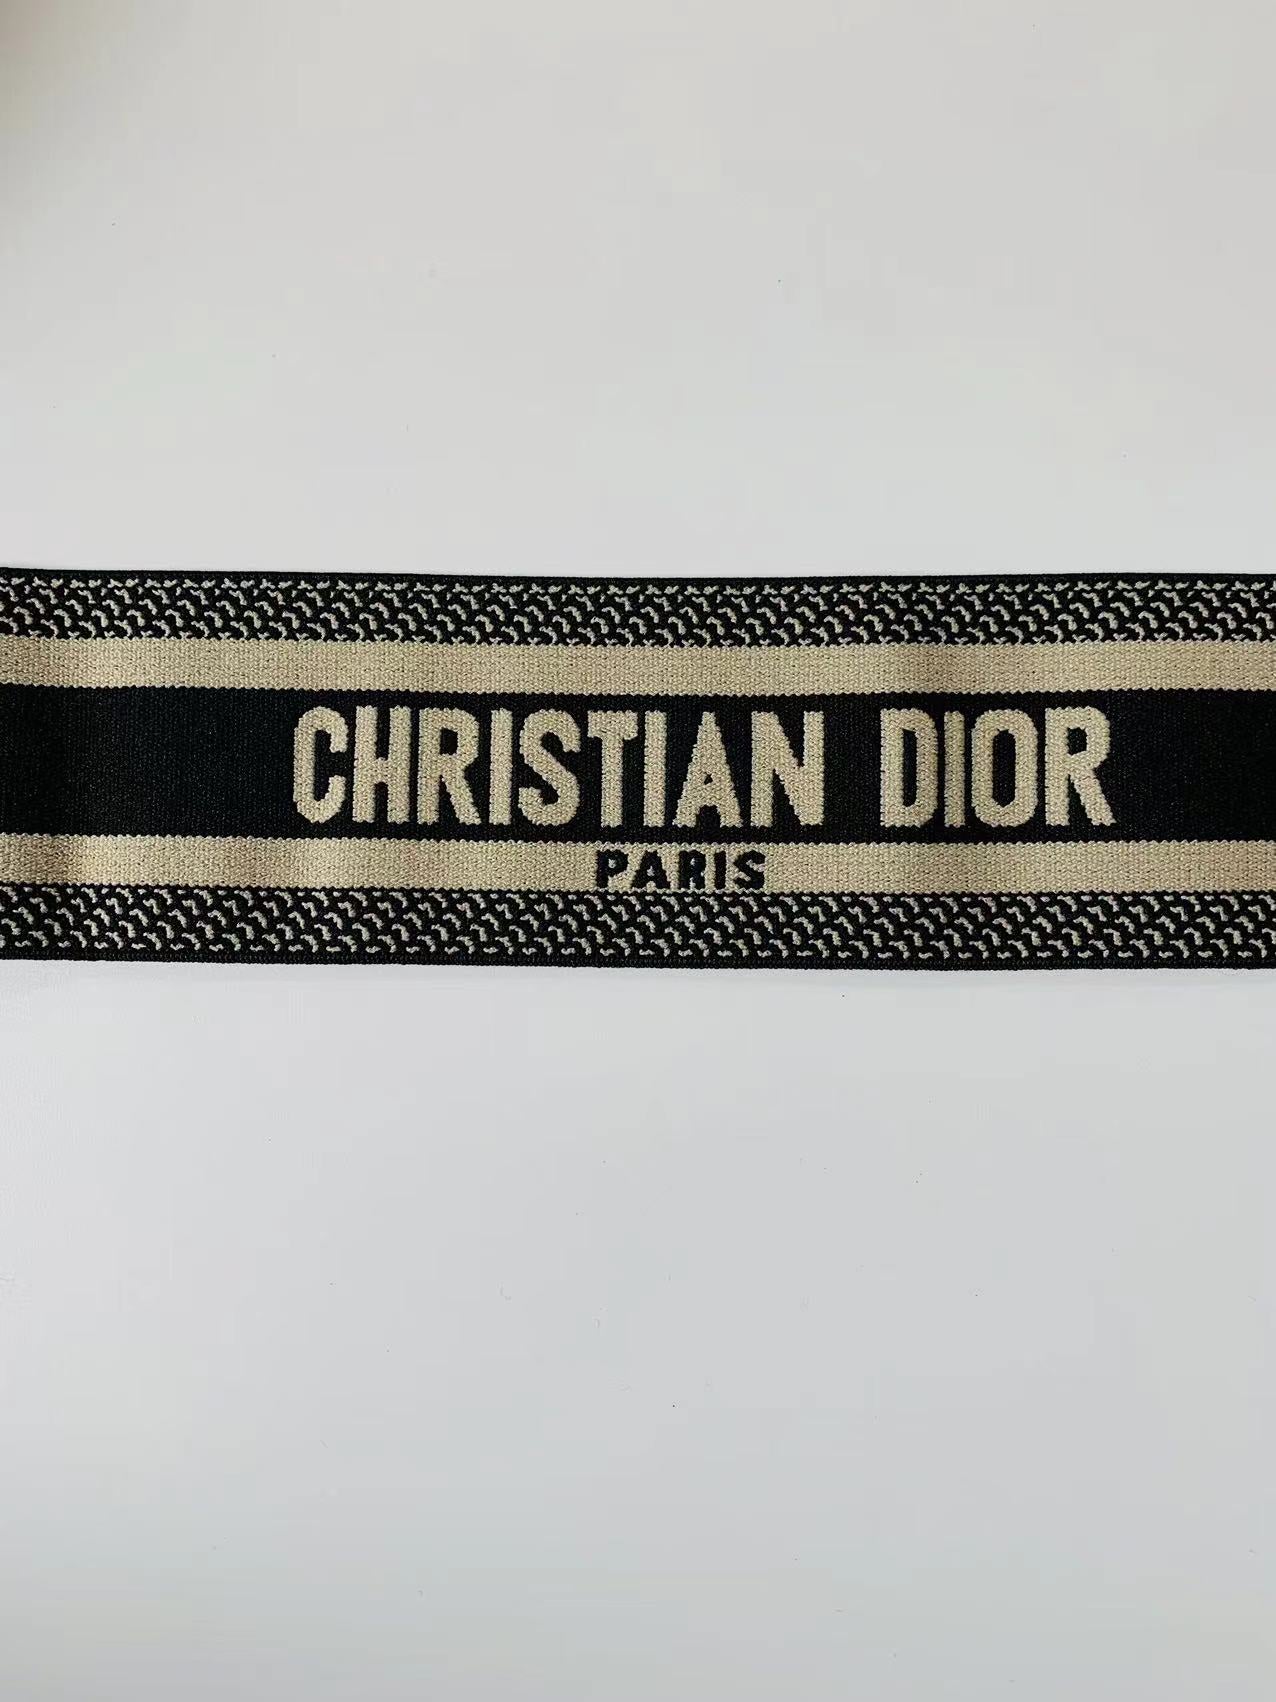 Christian Dior Paris 2.5 inch Elastic Strap ,Handmade